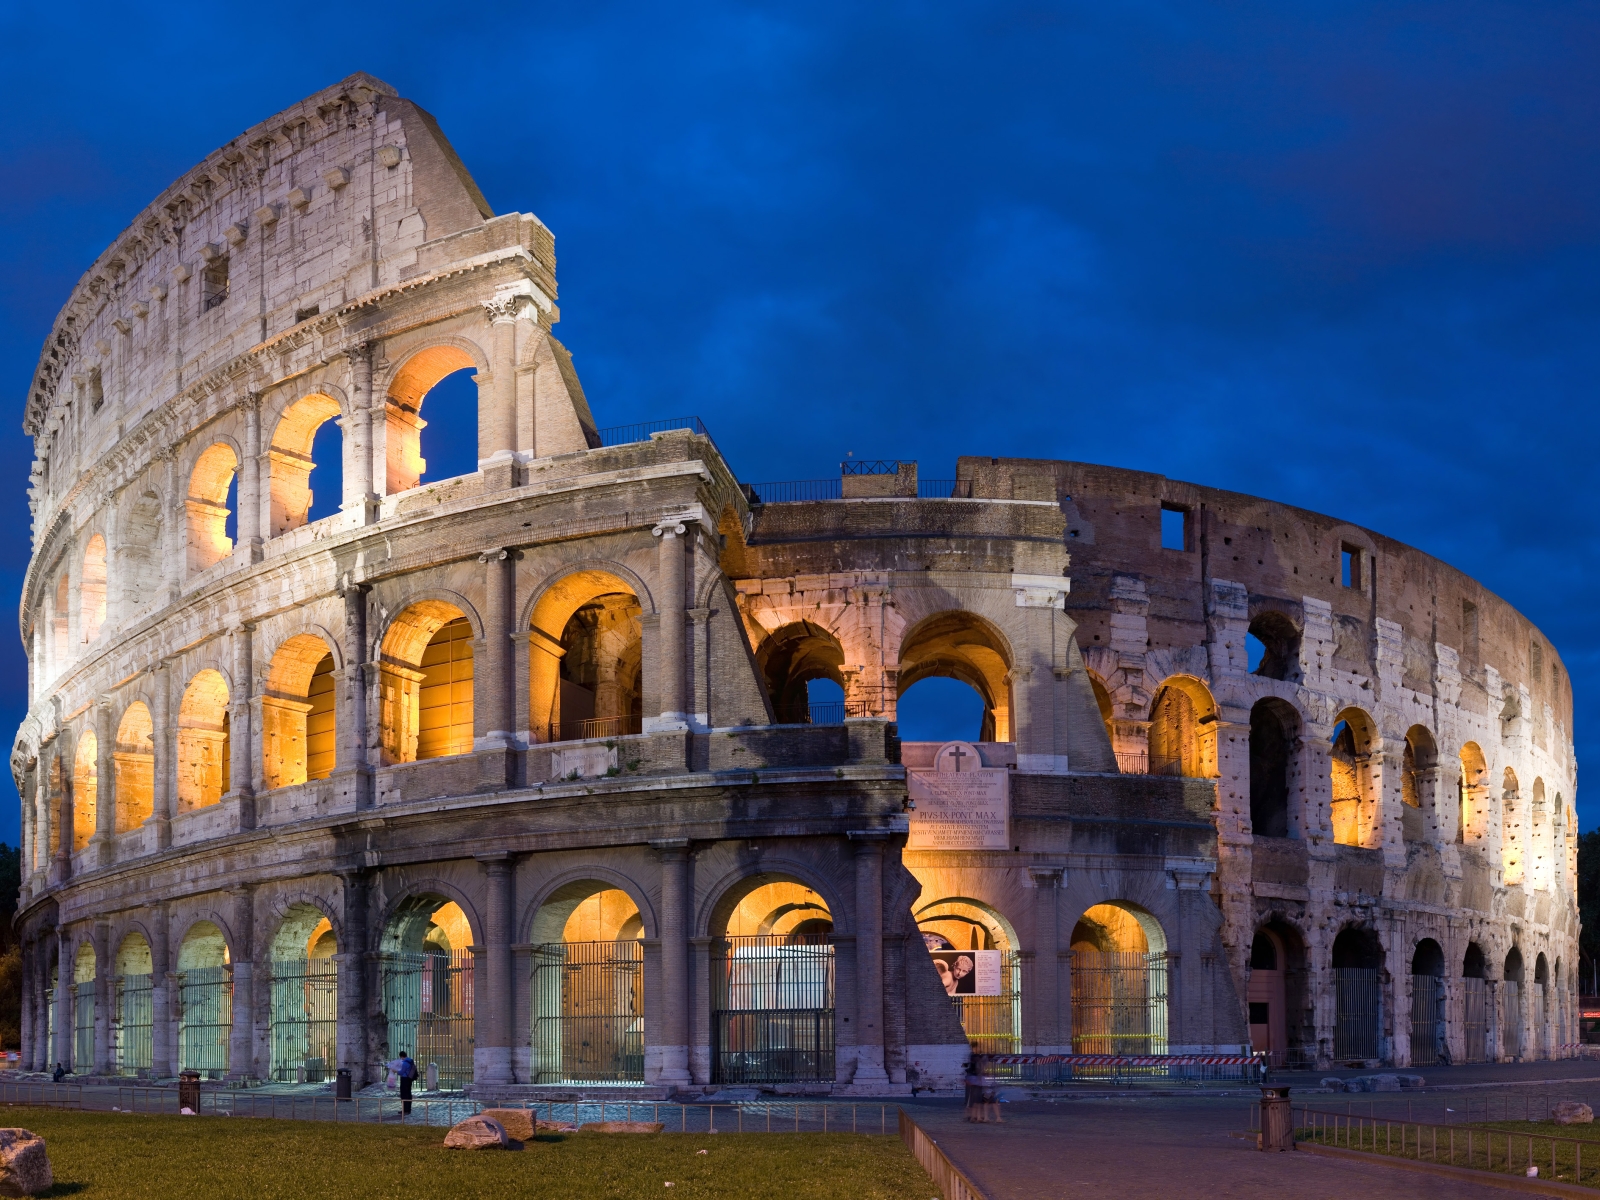 Wallpaper Of Colosseum In Rome Puter Desktop Image